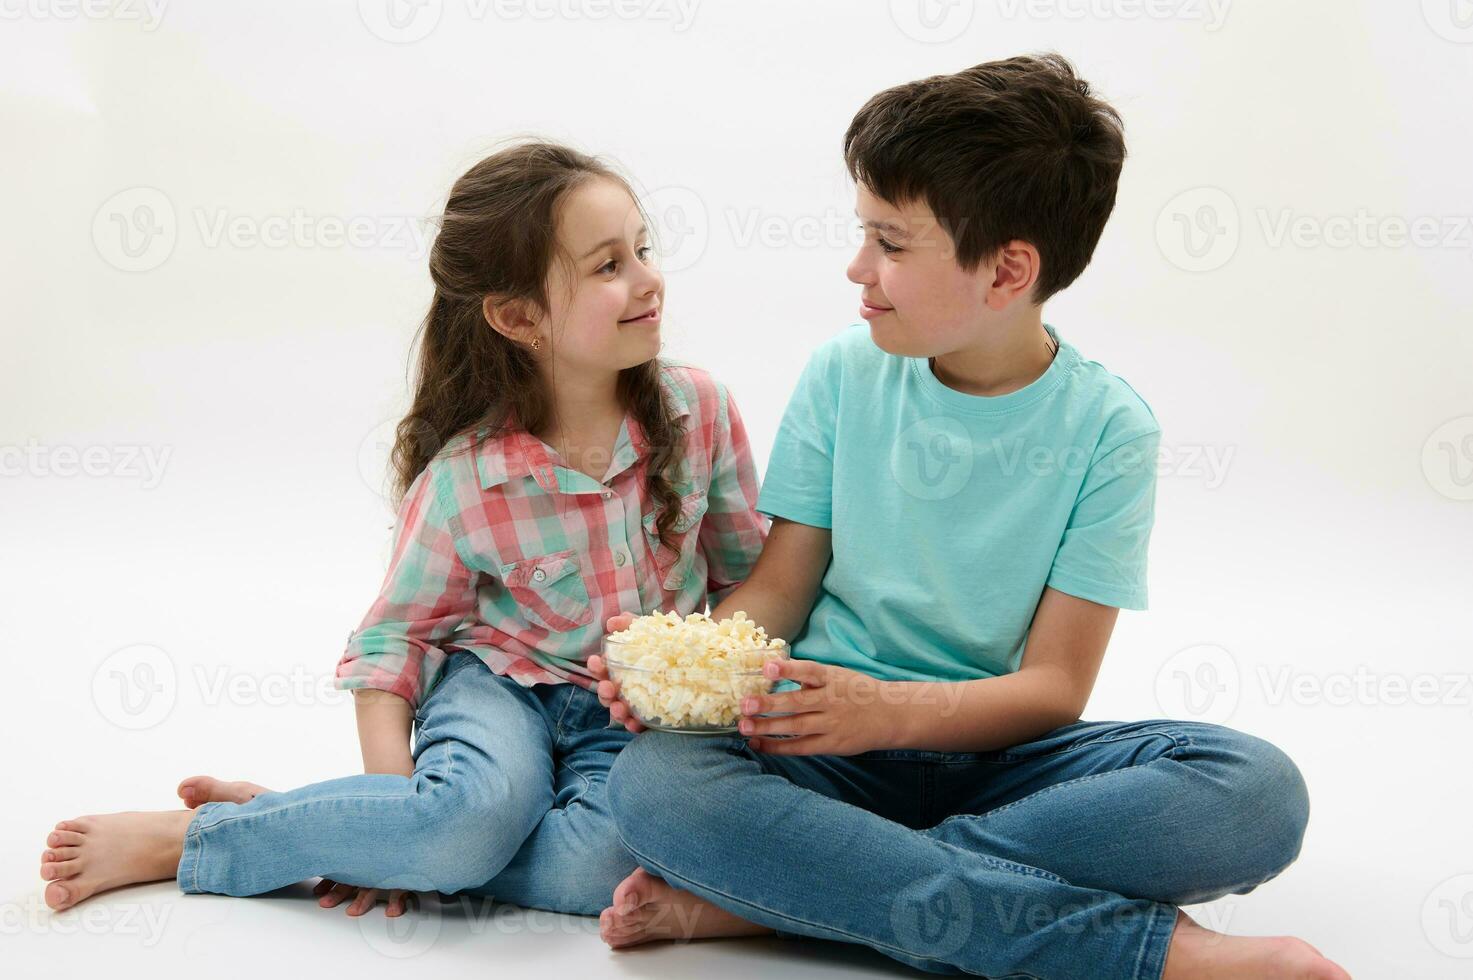 feliz pré-adolescente Garoto e menina comendo Pipoca, sorridente falando para cada outro, isolado branco fundo. infância. família foto